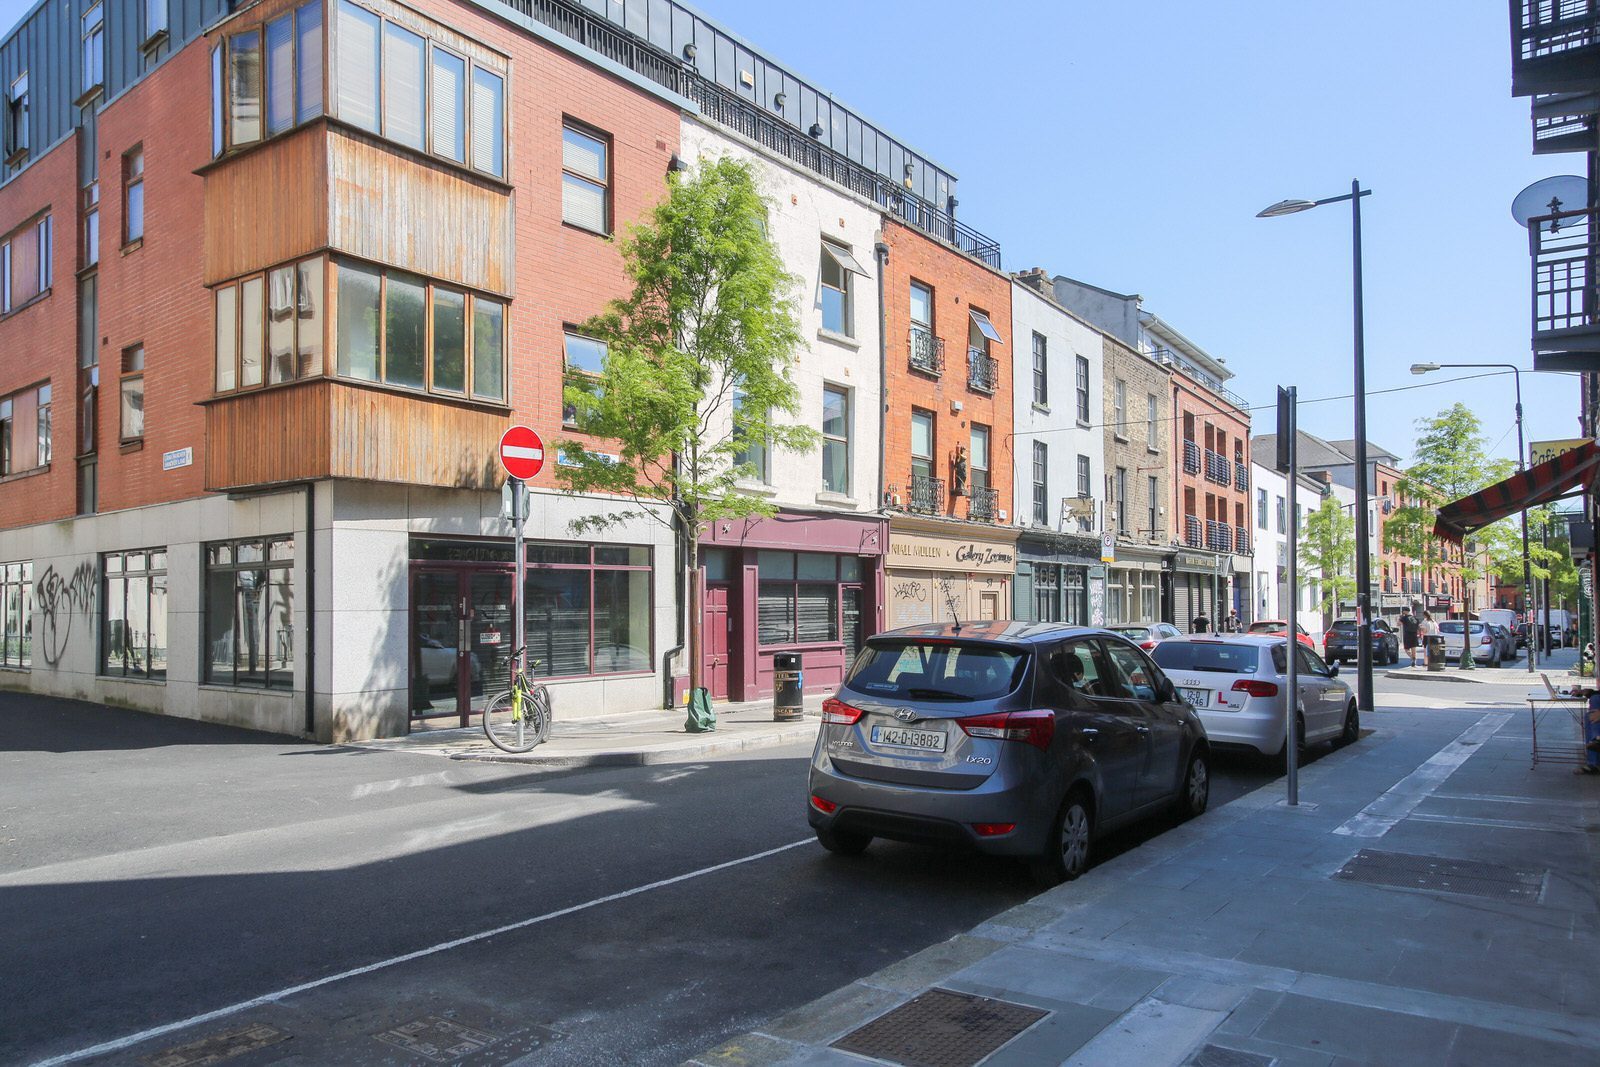 FRANCIS STREET IN DUBLIN [NO LONGER A NEVER ENDING CONSTRUCTION SITE] 009